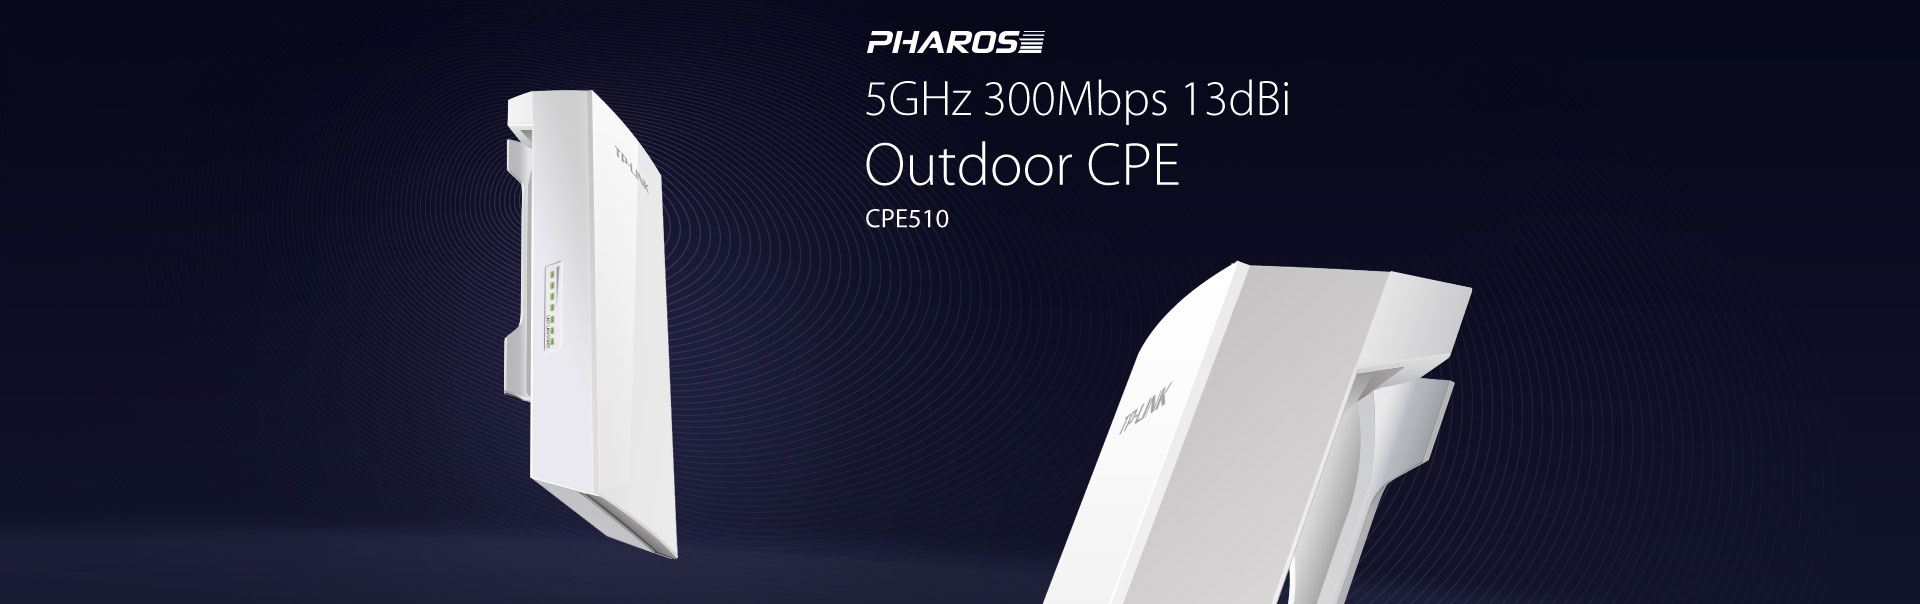 Pharos 5GHz 300Mbps 9dBi Outdoor CPE